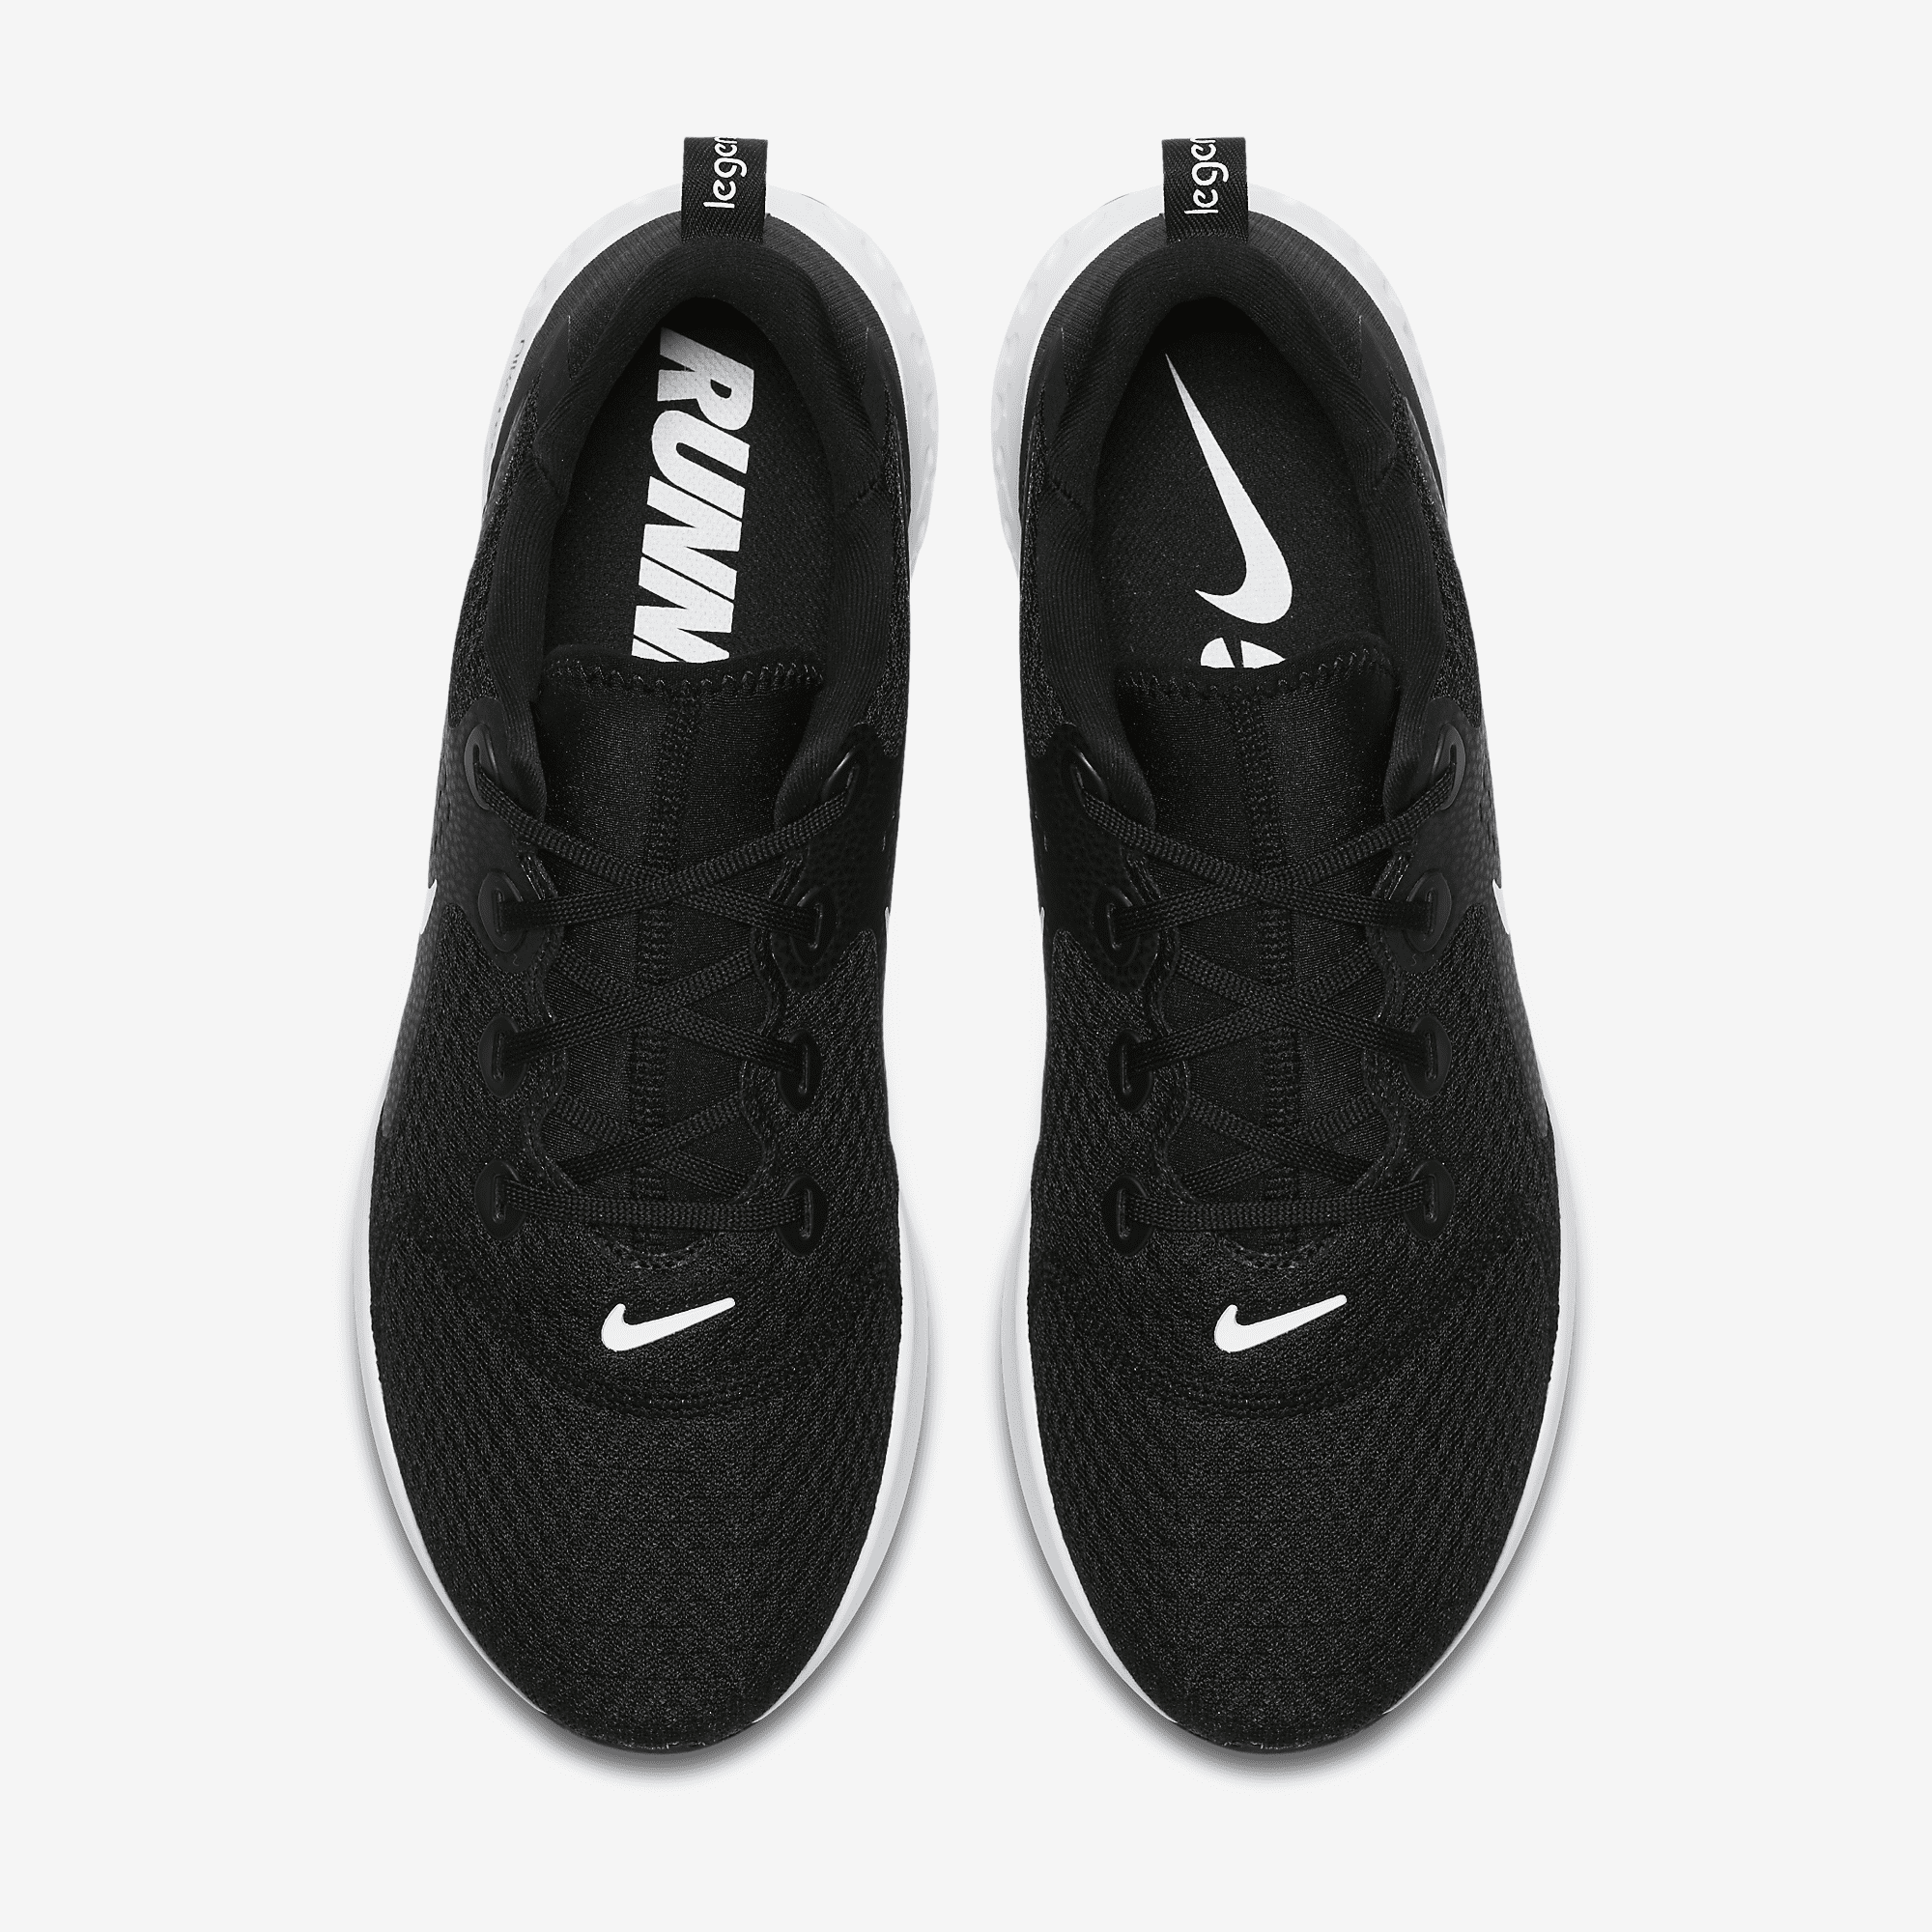 Nike Legend React shoe size 14 Casual AA1625-001 Black White Walmart.com